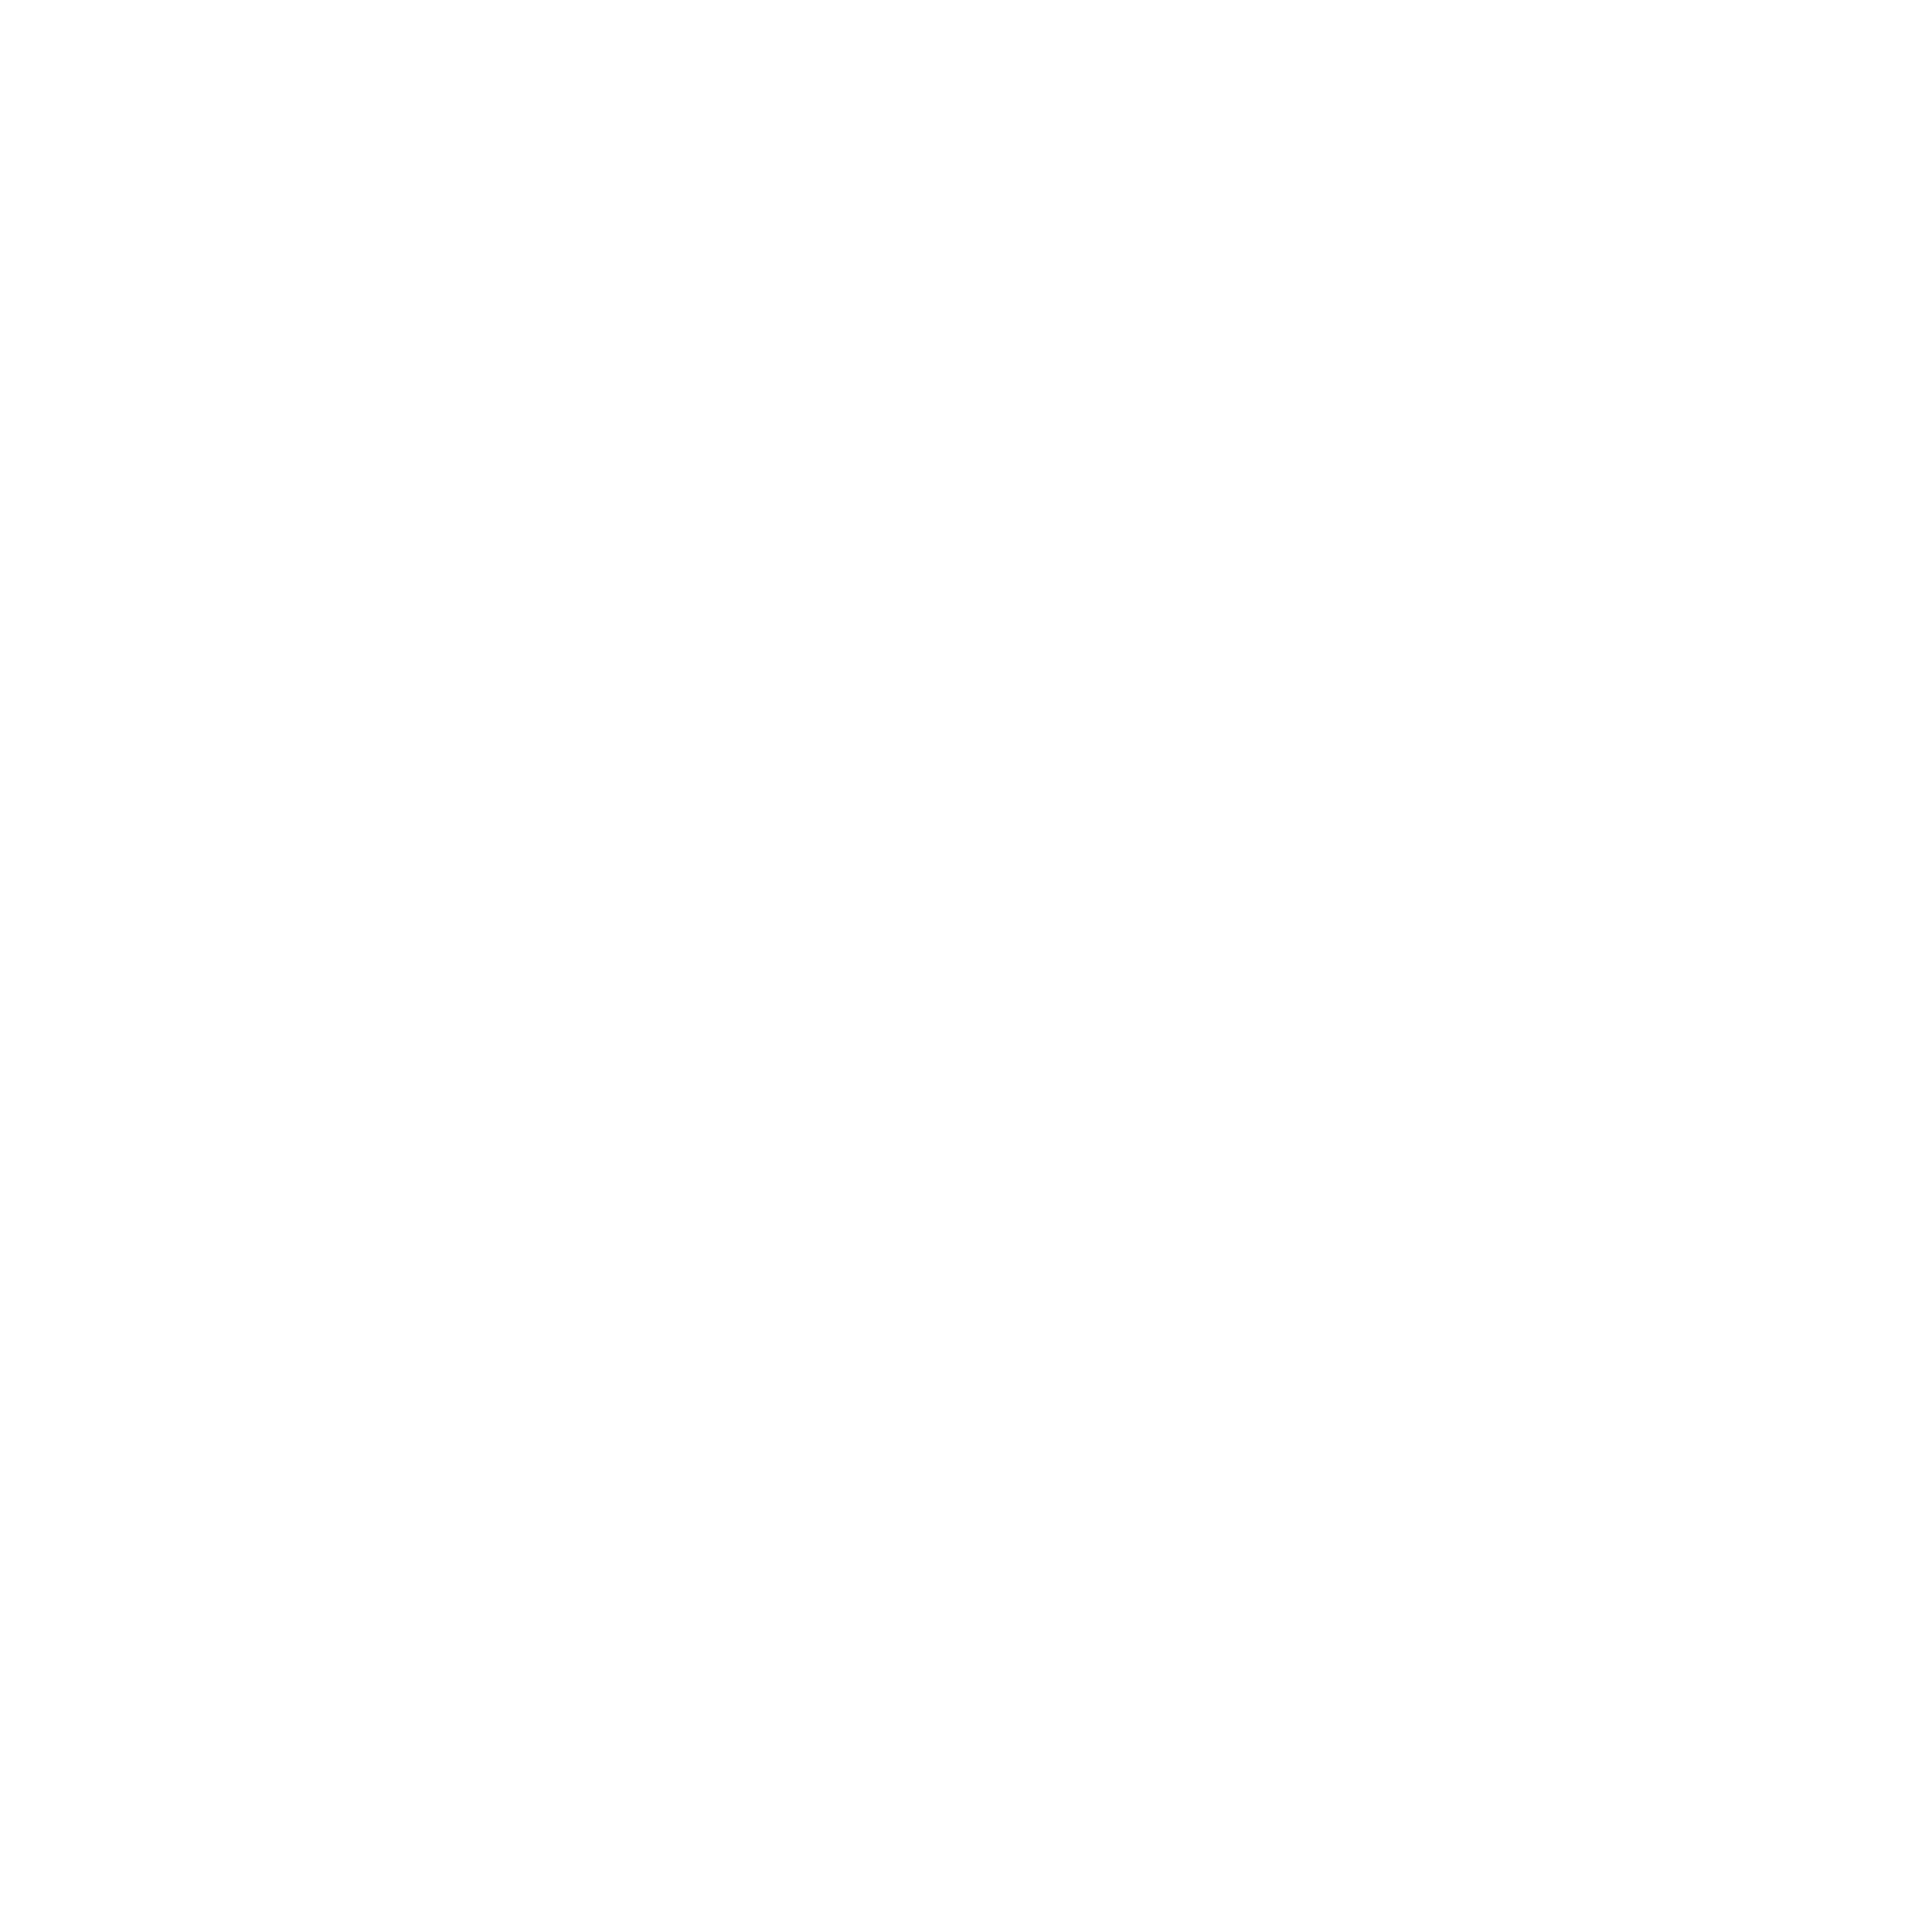 Kronos Limited